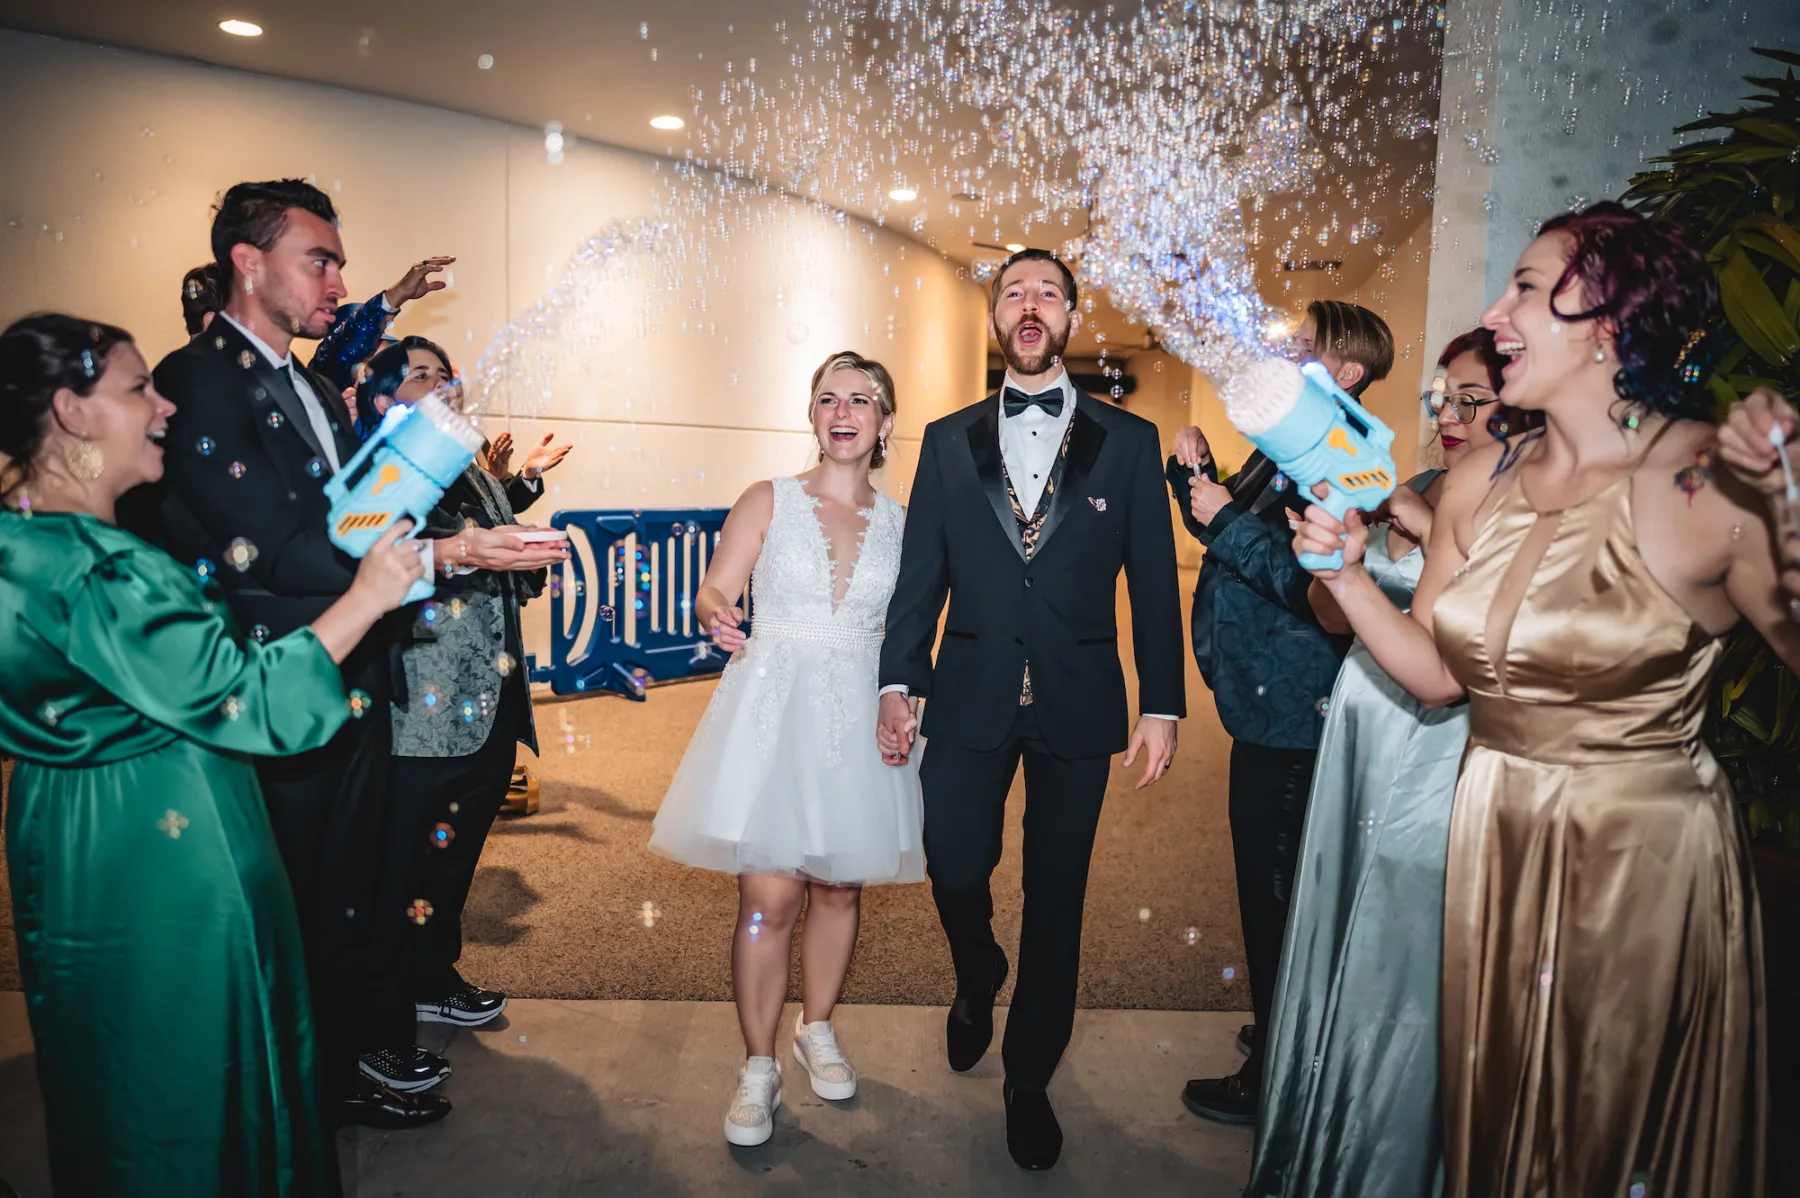 Second Wedding Reception Tulle Skirt Mini Dress Ideas | Bubble Gun Grand Exit Inspiration